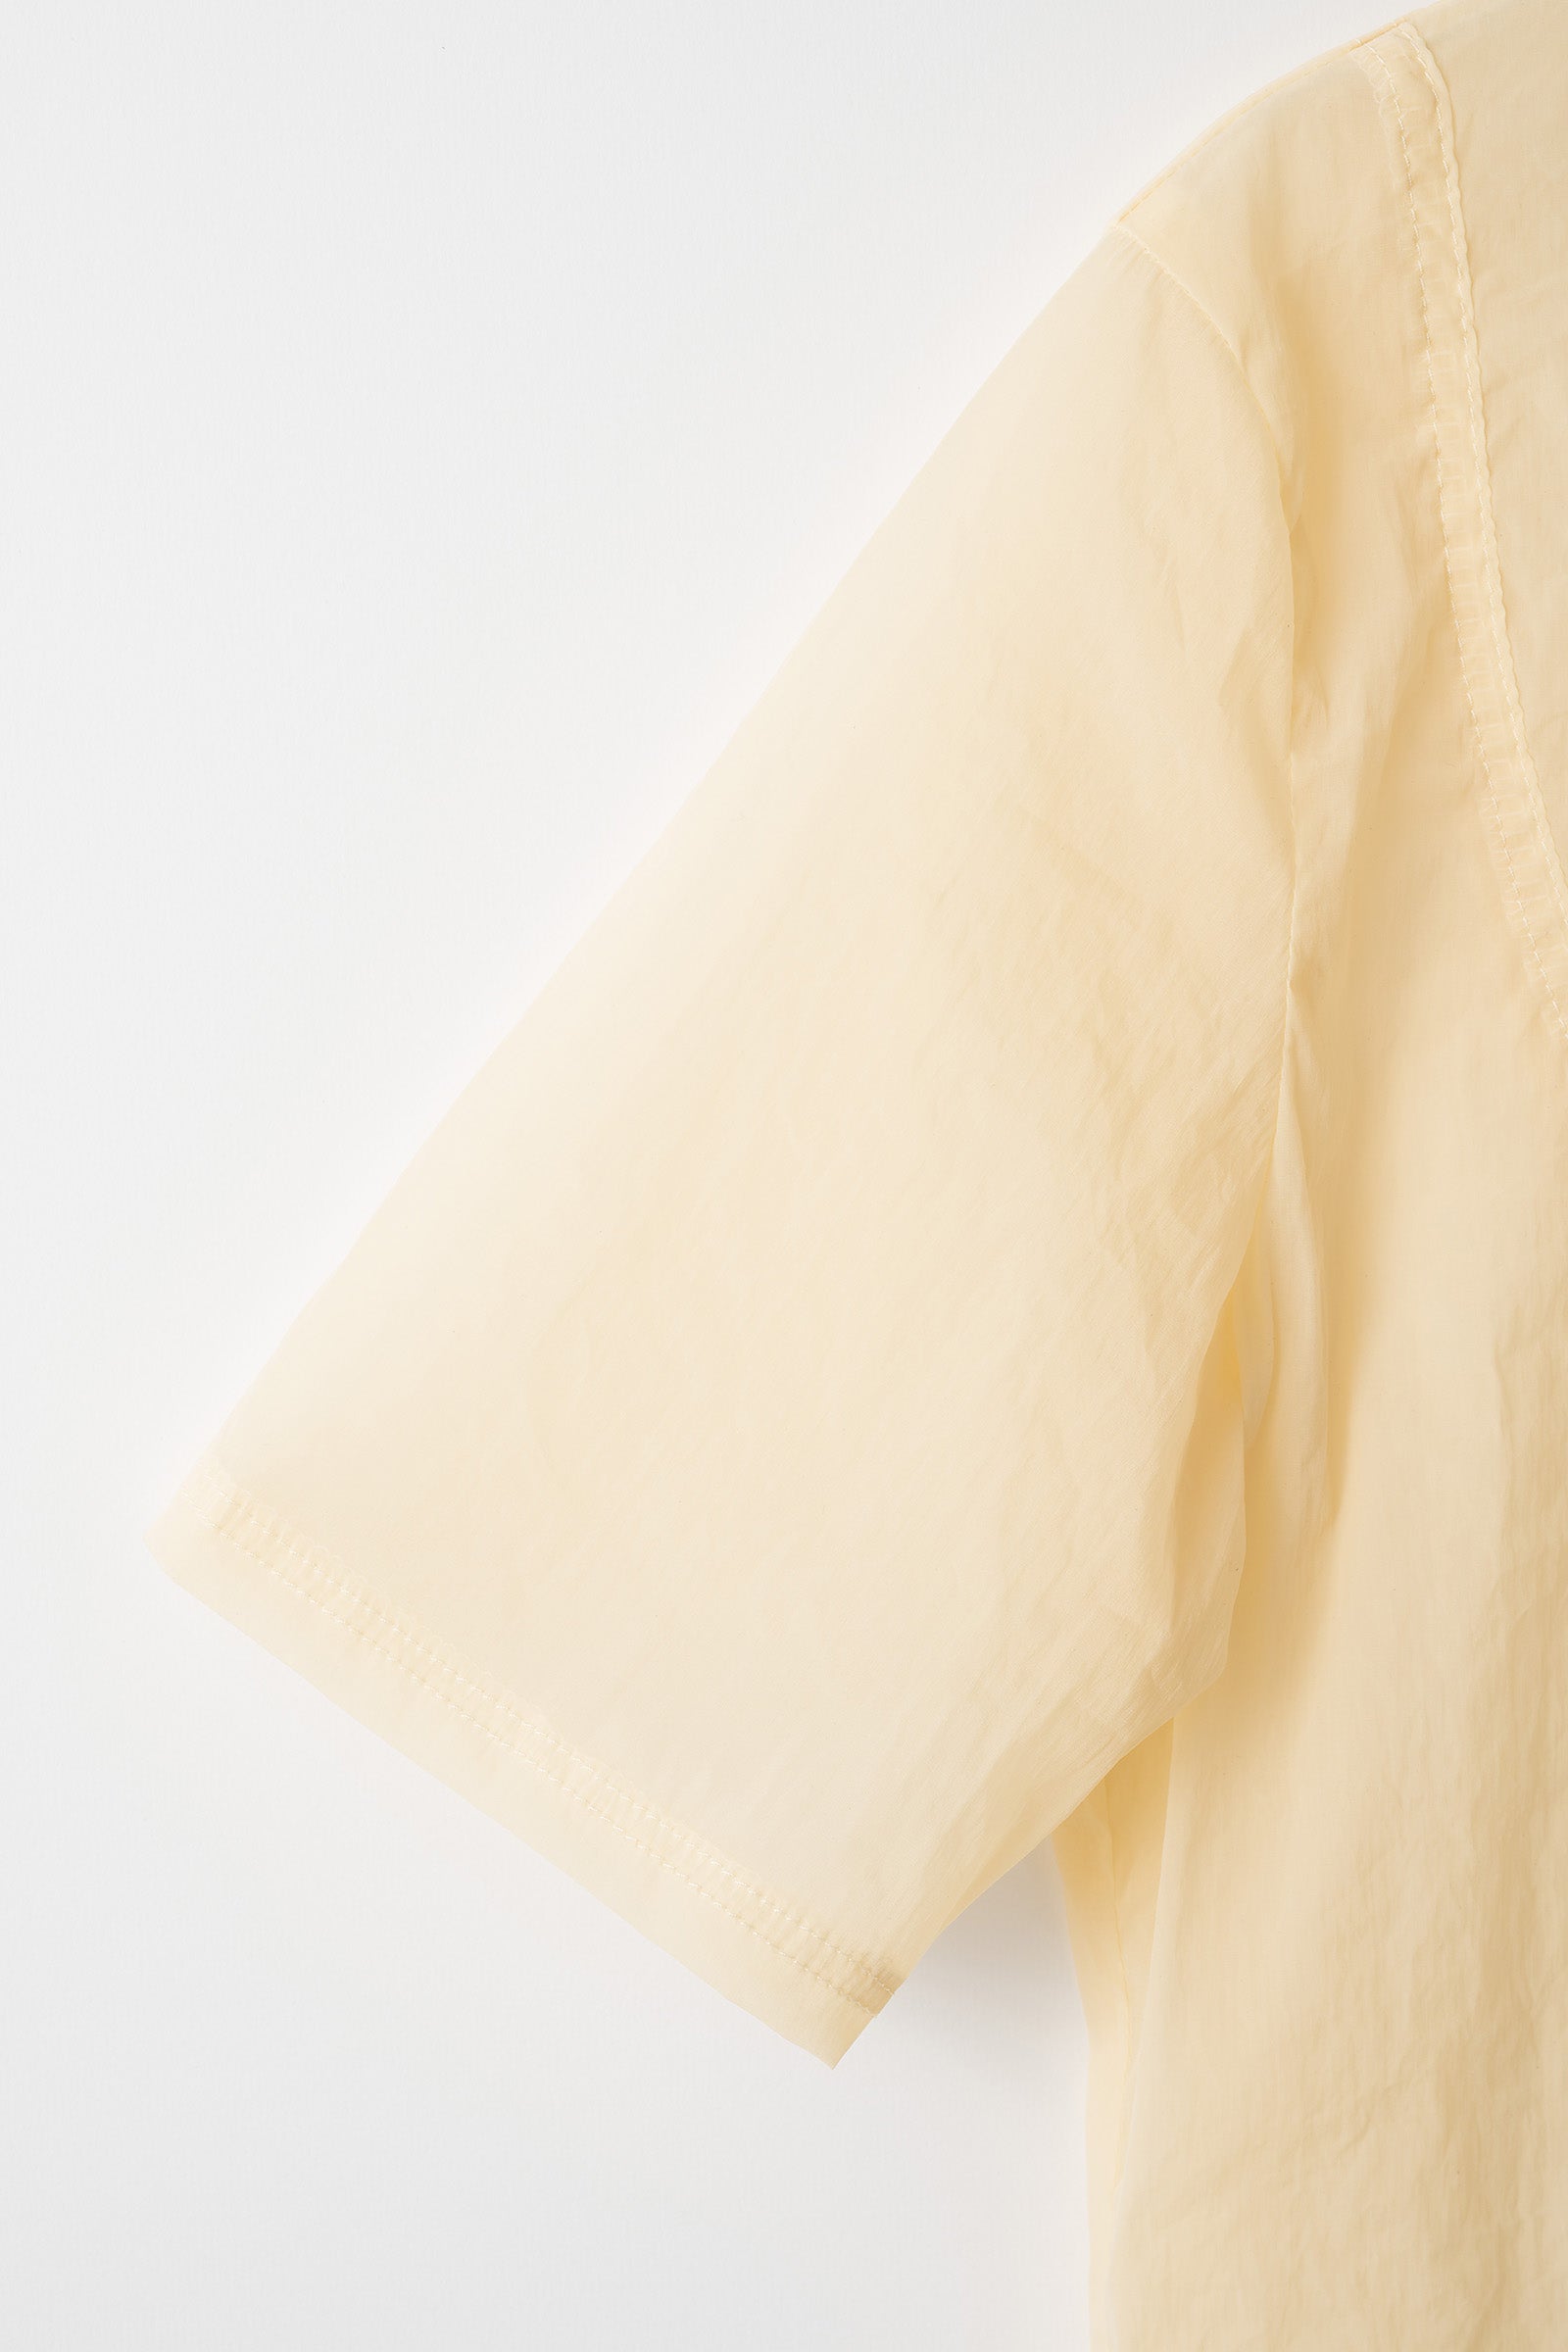 Translucent short sleeve top (Beige)